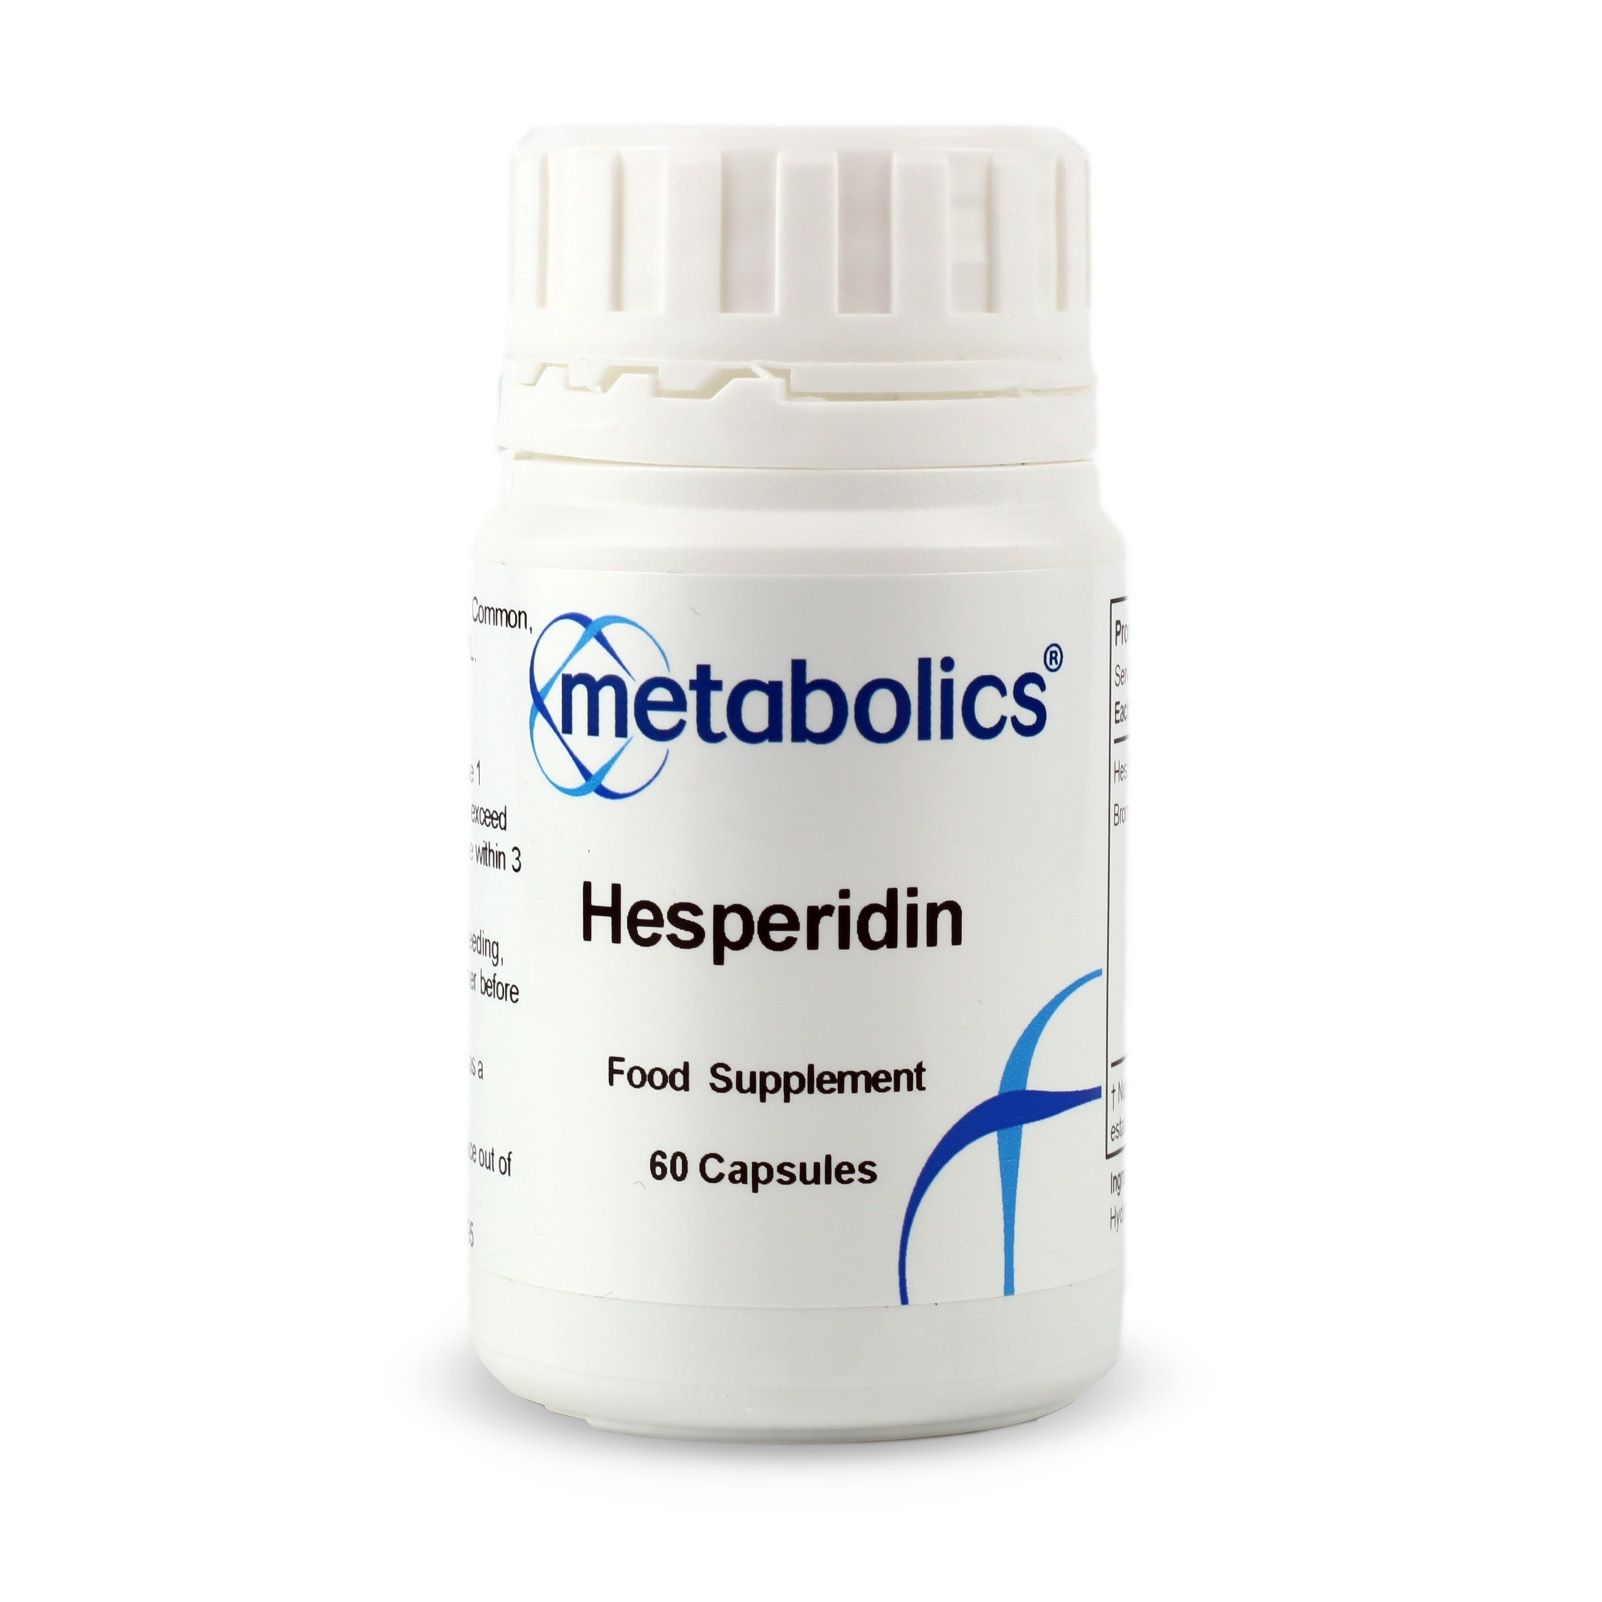 Hesperidin (Pot Of 60 Capsules)